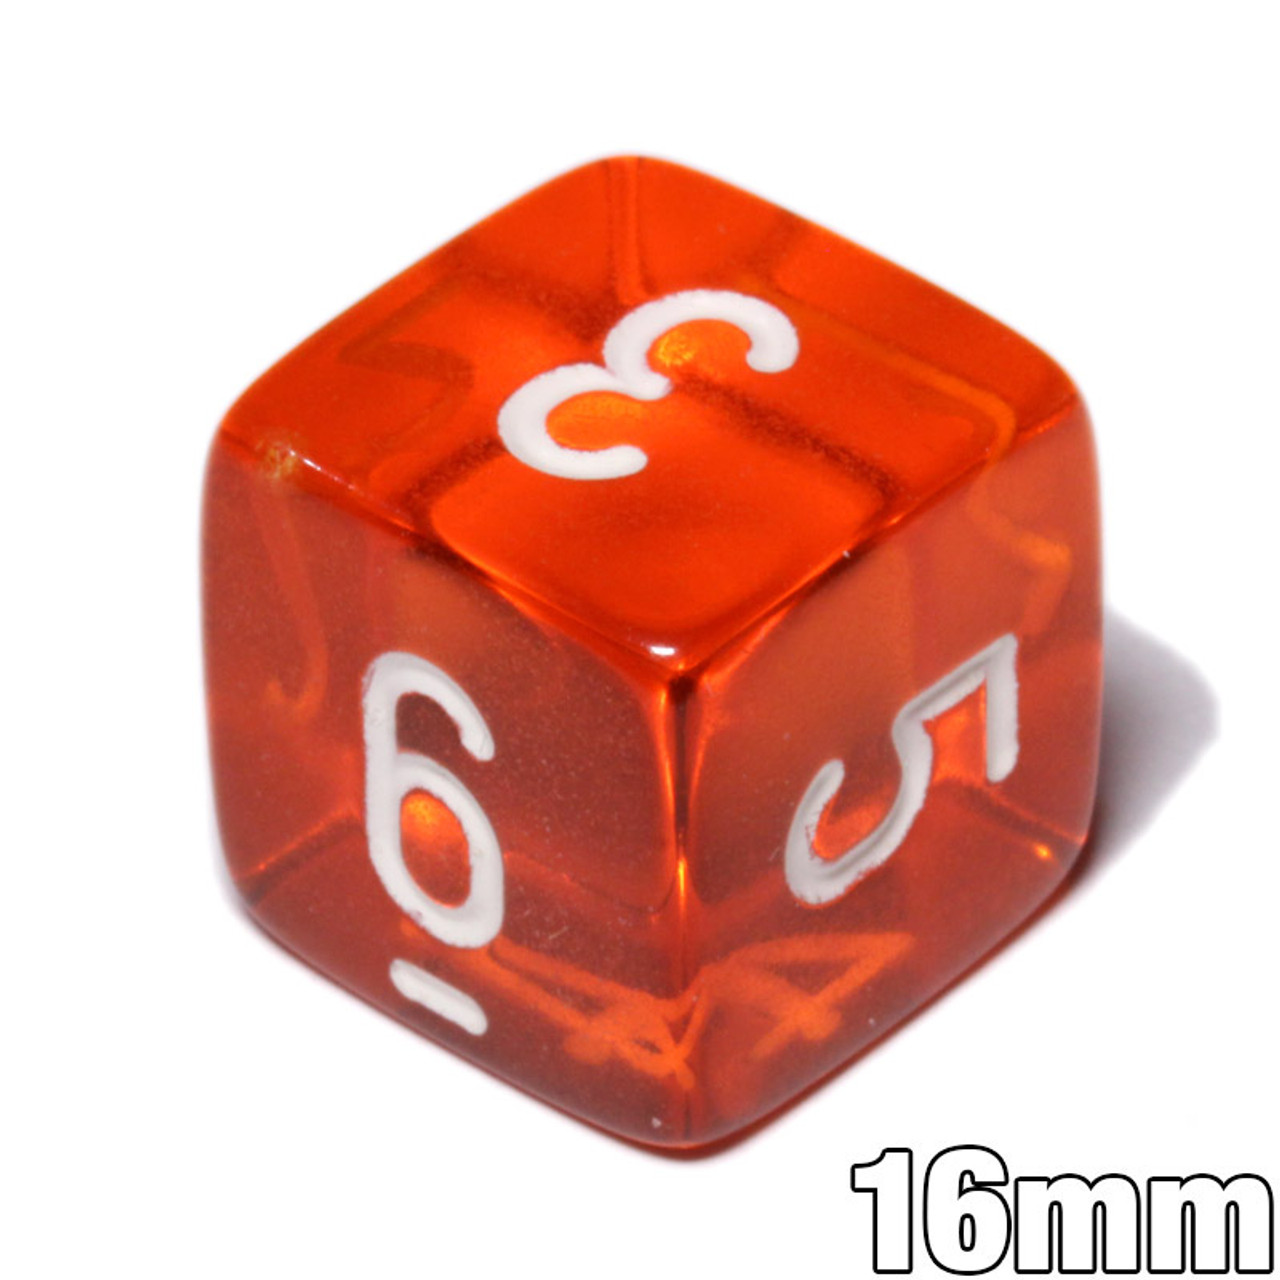 4-Sided Translucent Dice (d4) - Orange